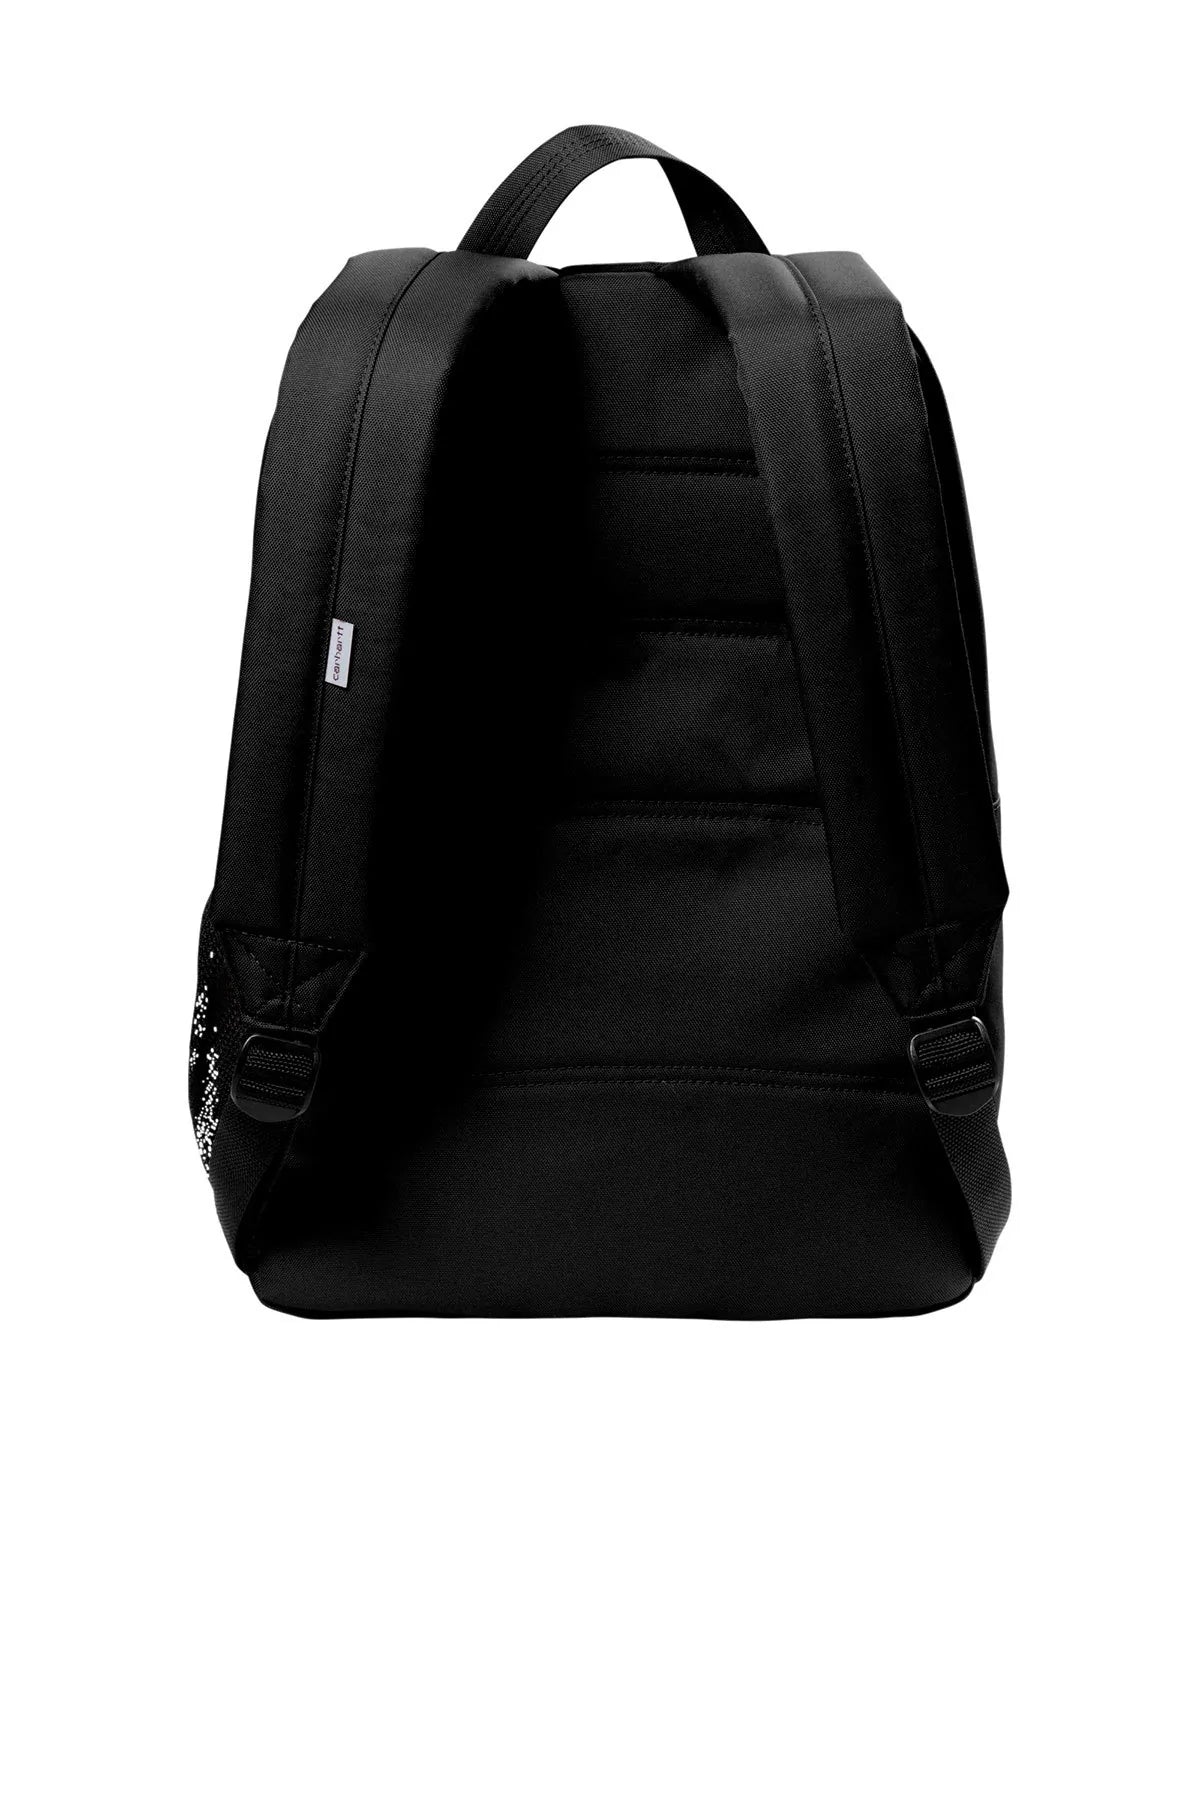 Carhartt Canvas Branded Backpacks, Black